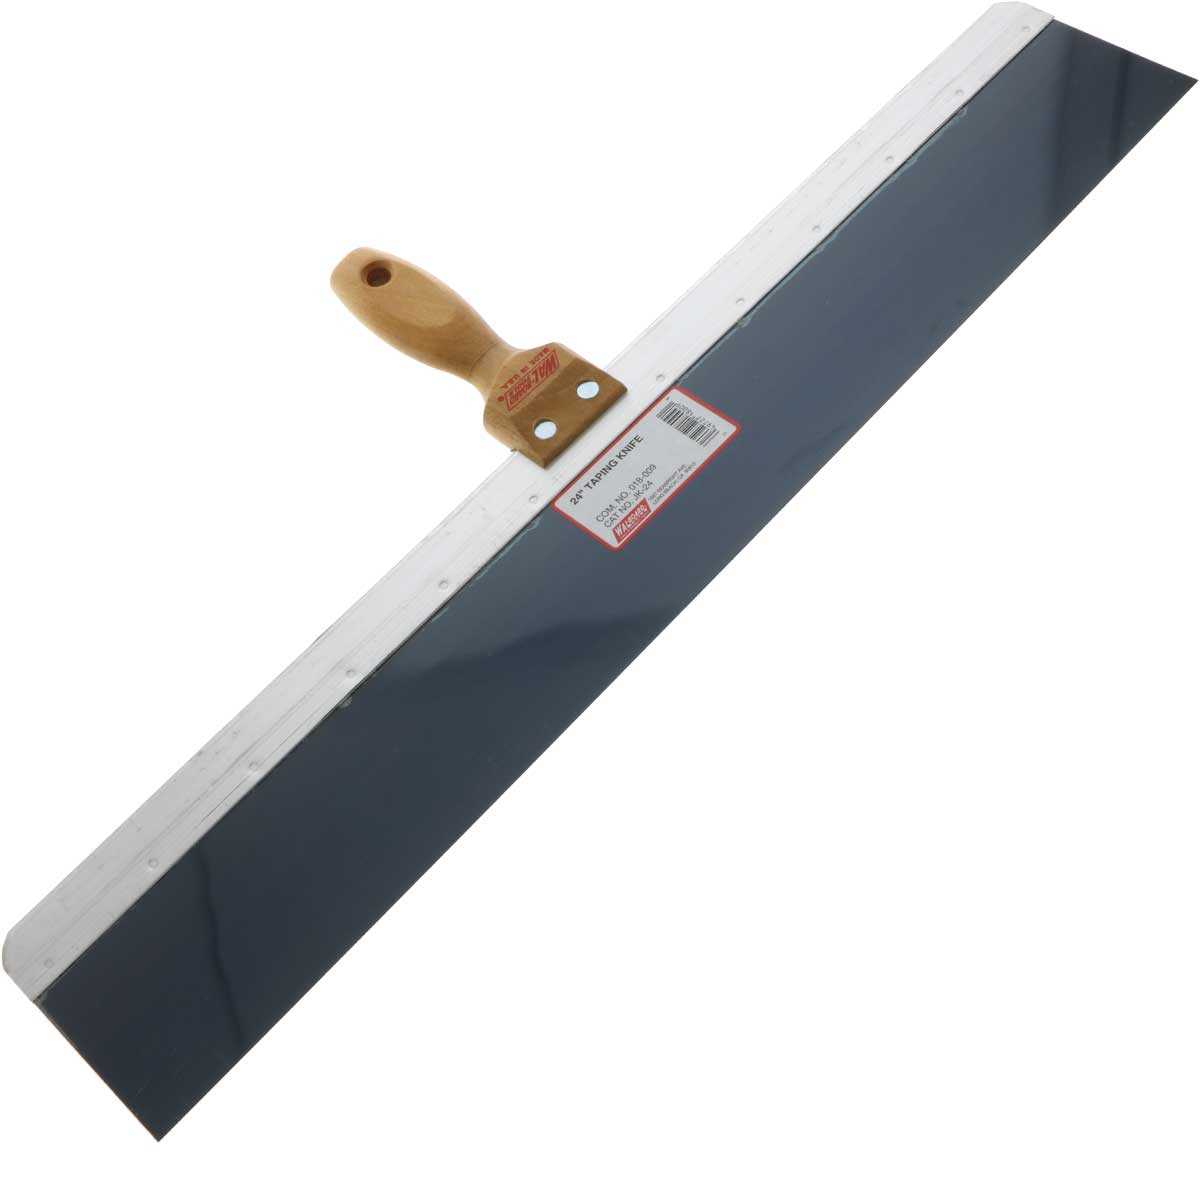 Wal-Board 24" JK Wood BS Knife